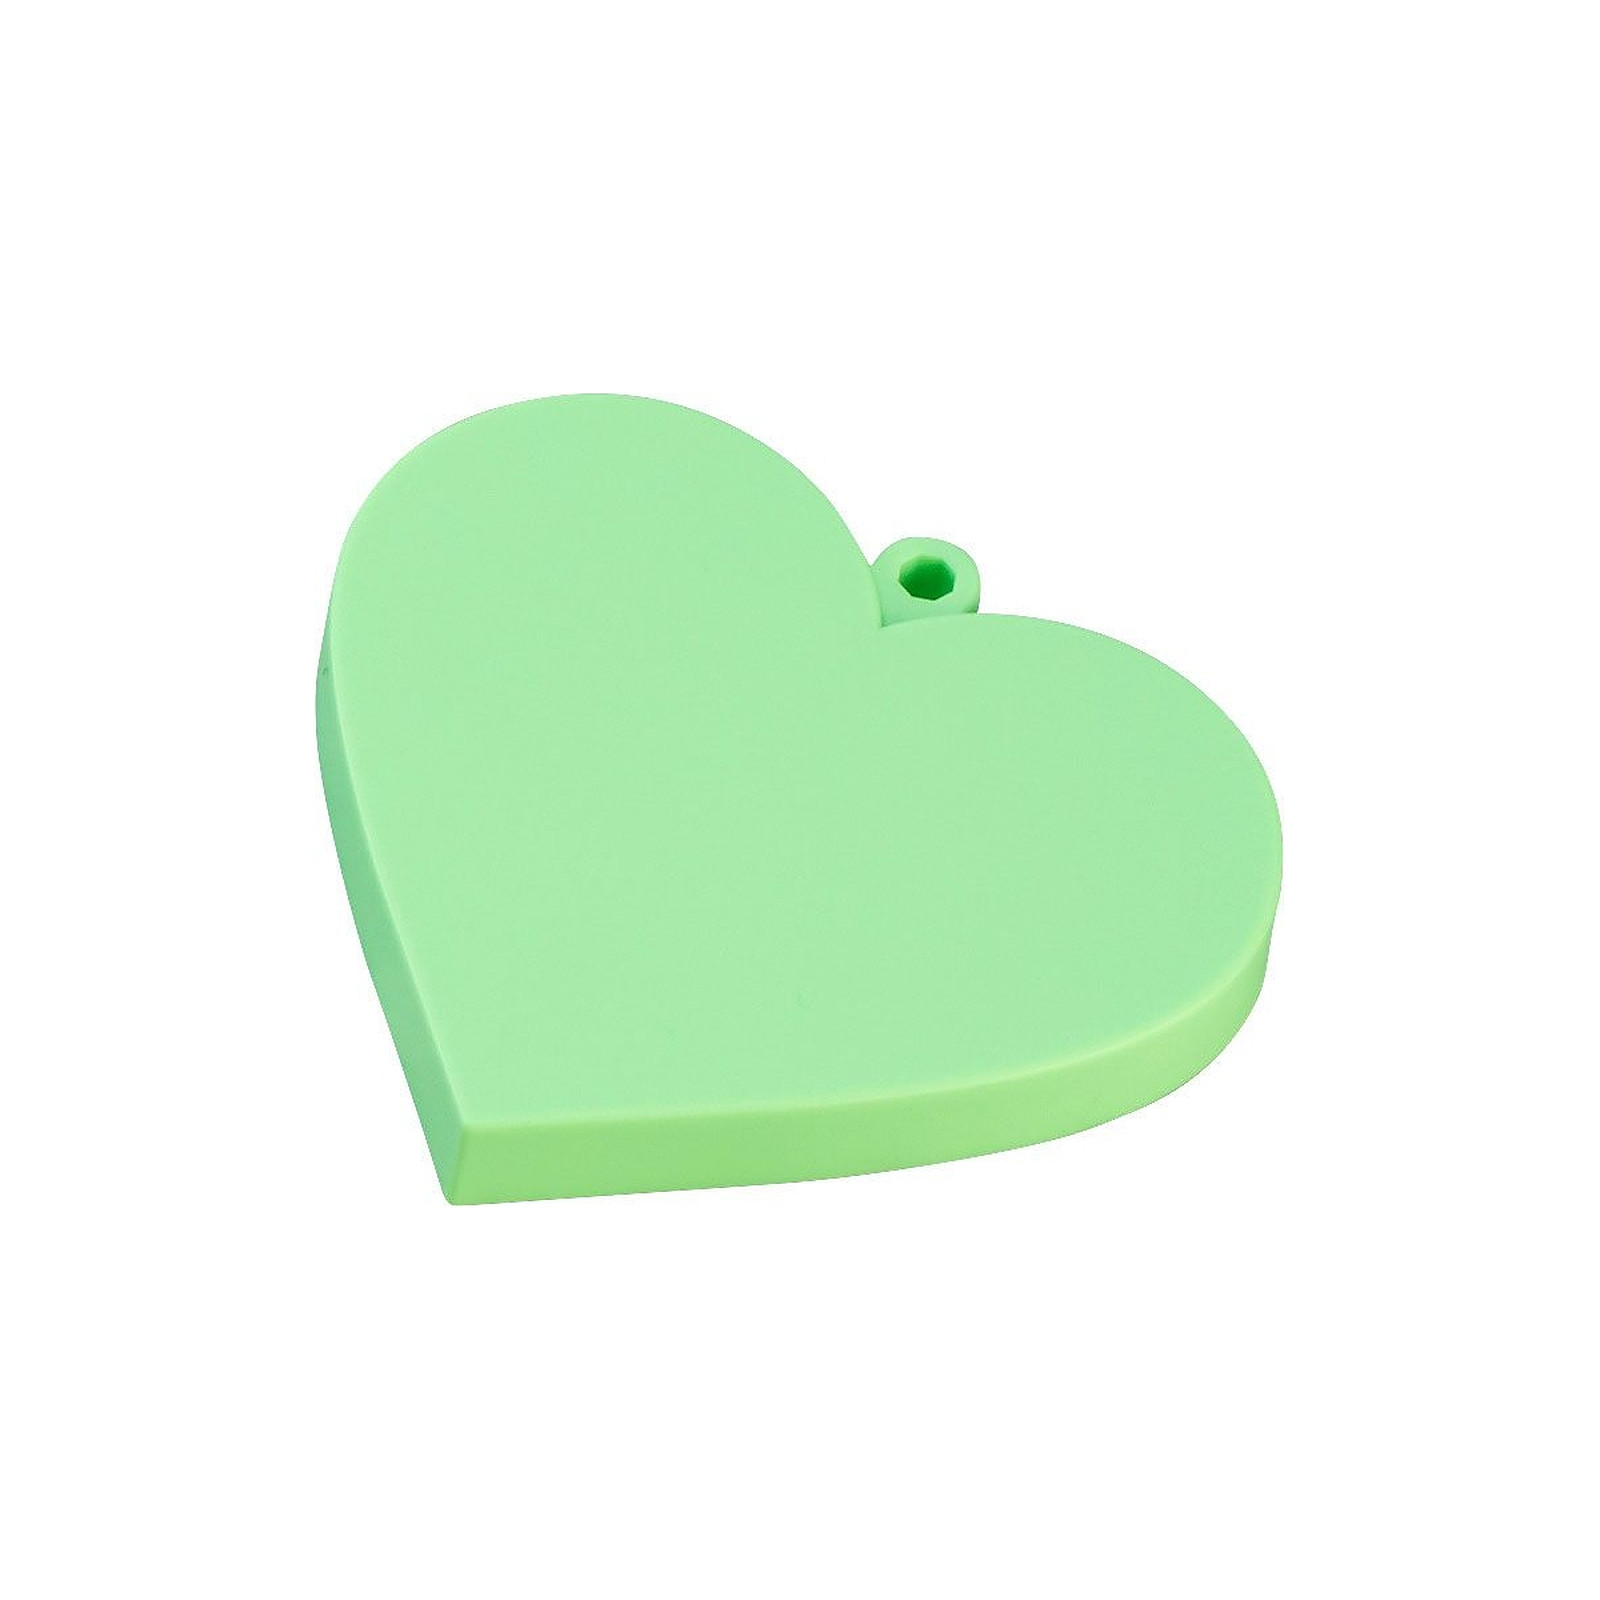 Nendoroid More - Socle pour figurines Nendoroid Heart Green Version - Figurines Good Smile Company